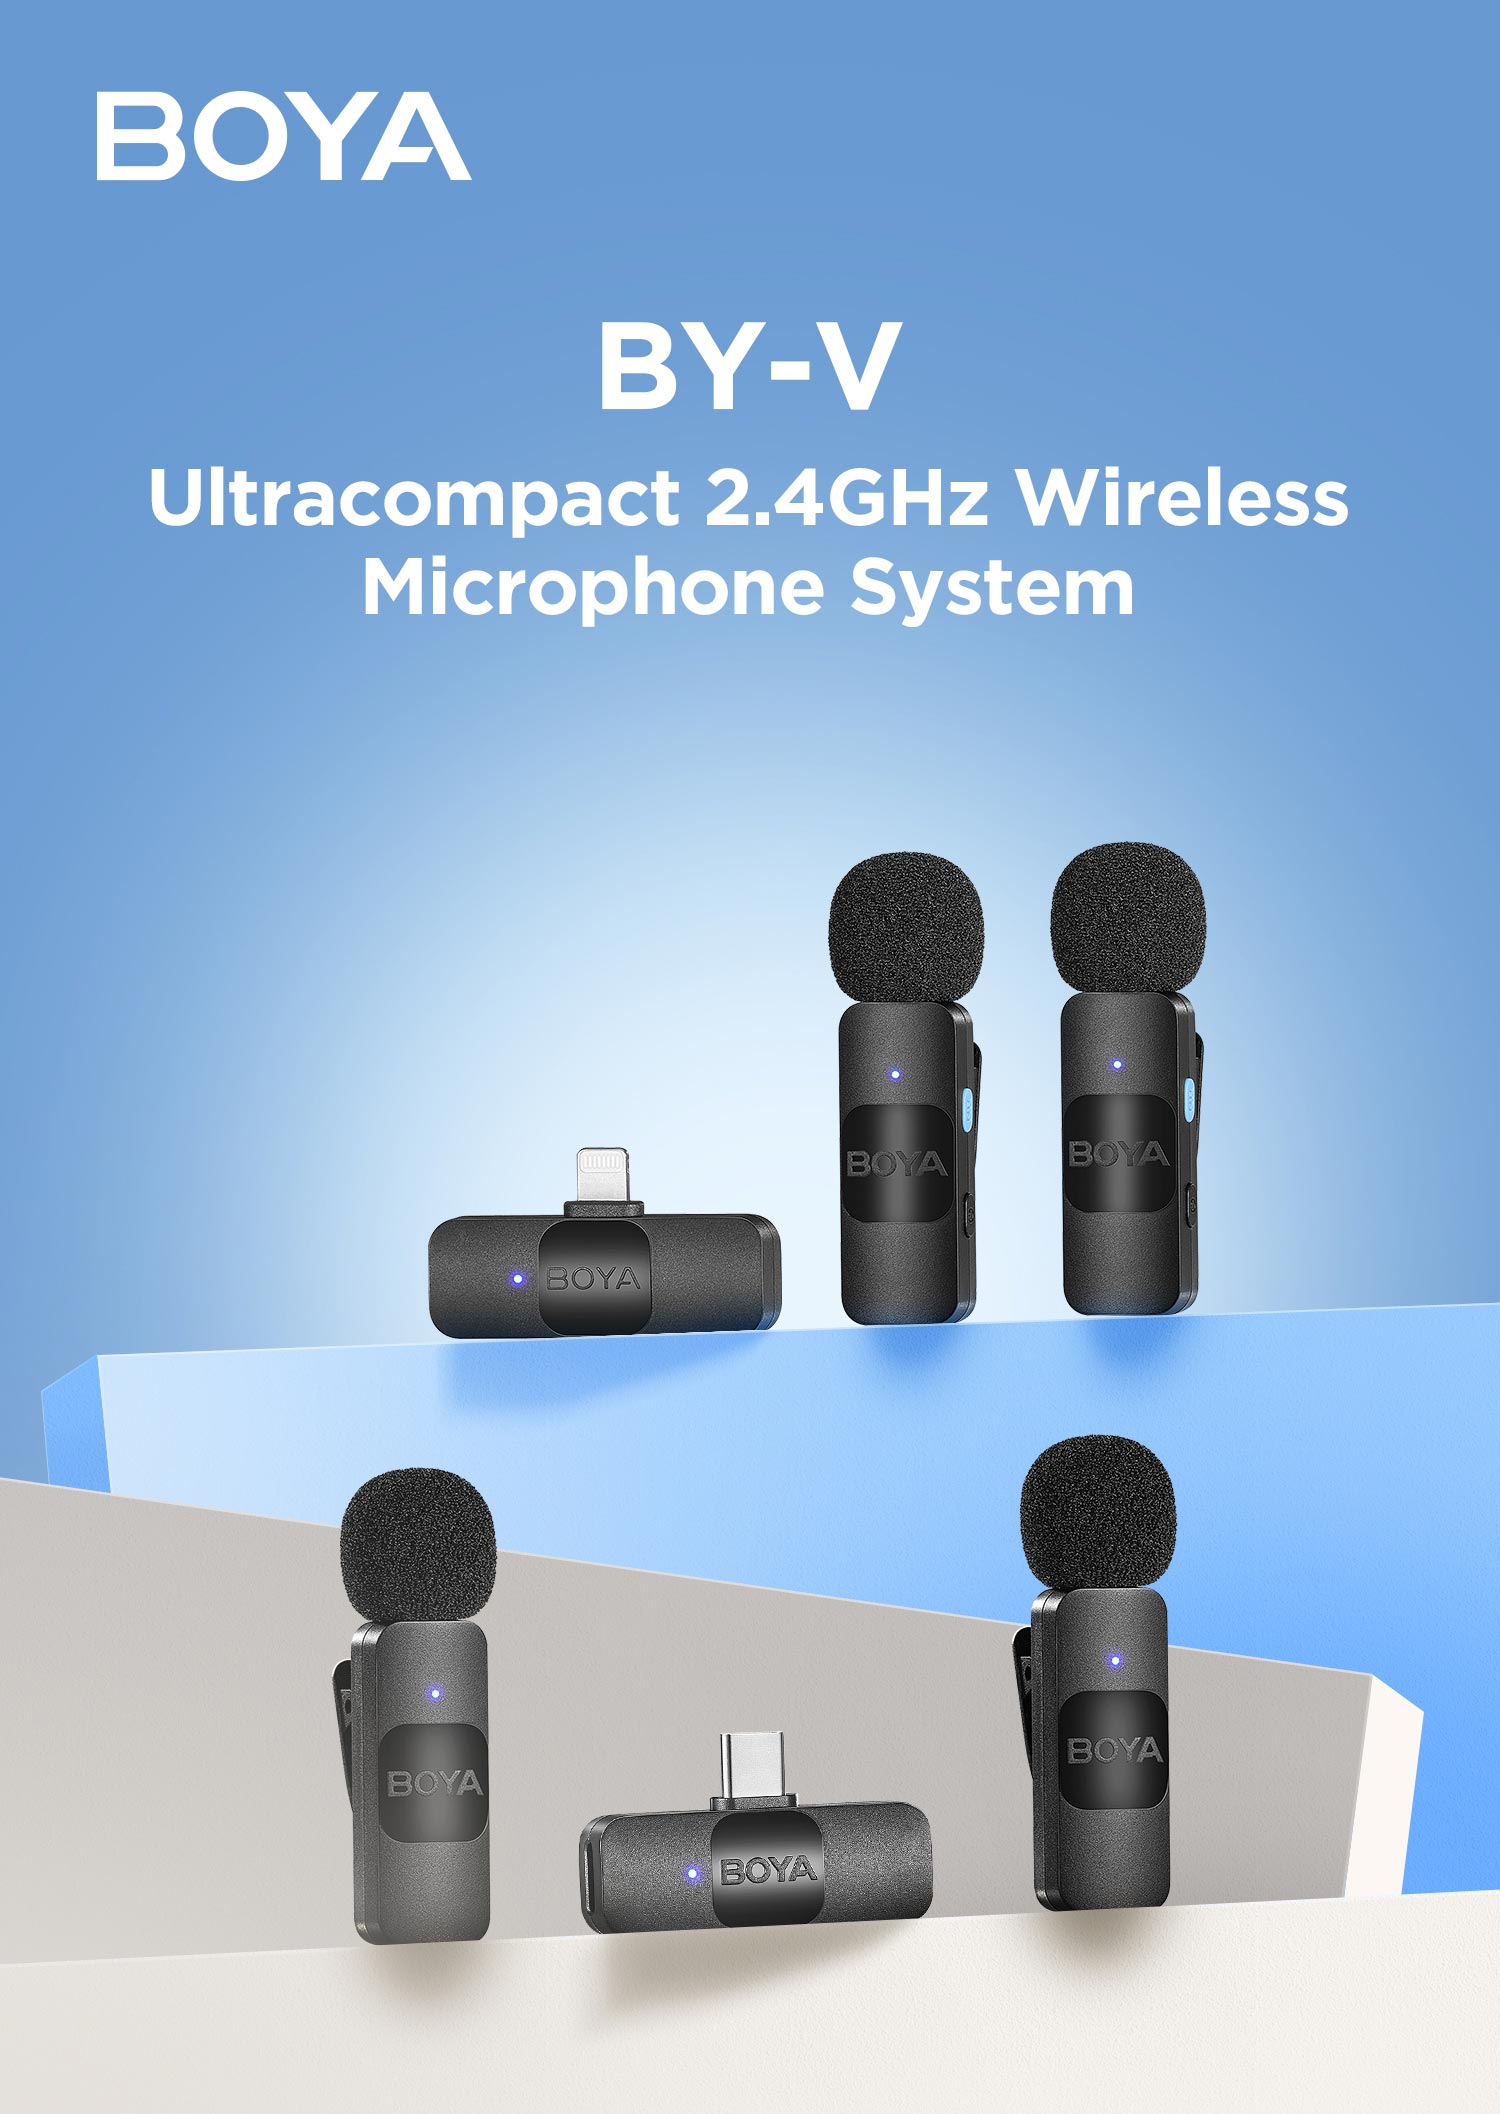 boya wireless microphone